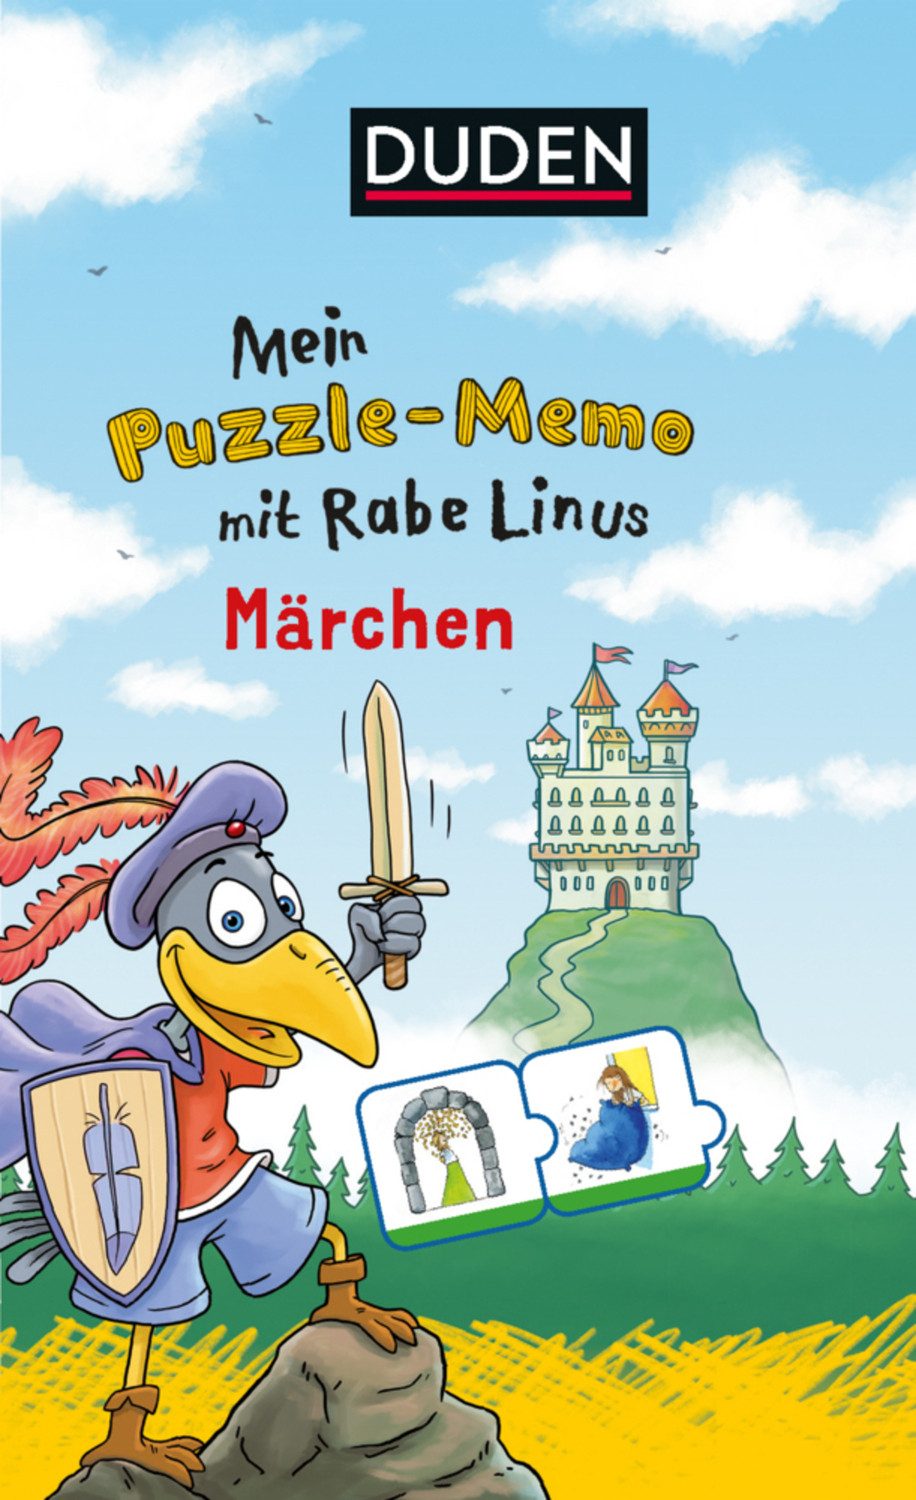 Duden Puzzle Mein Puzzlememo mit Rabe Linus - Märchen (Kinderspiel), Puzzleteile